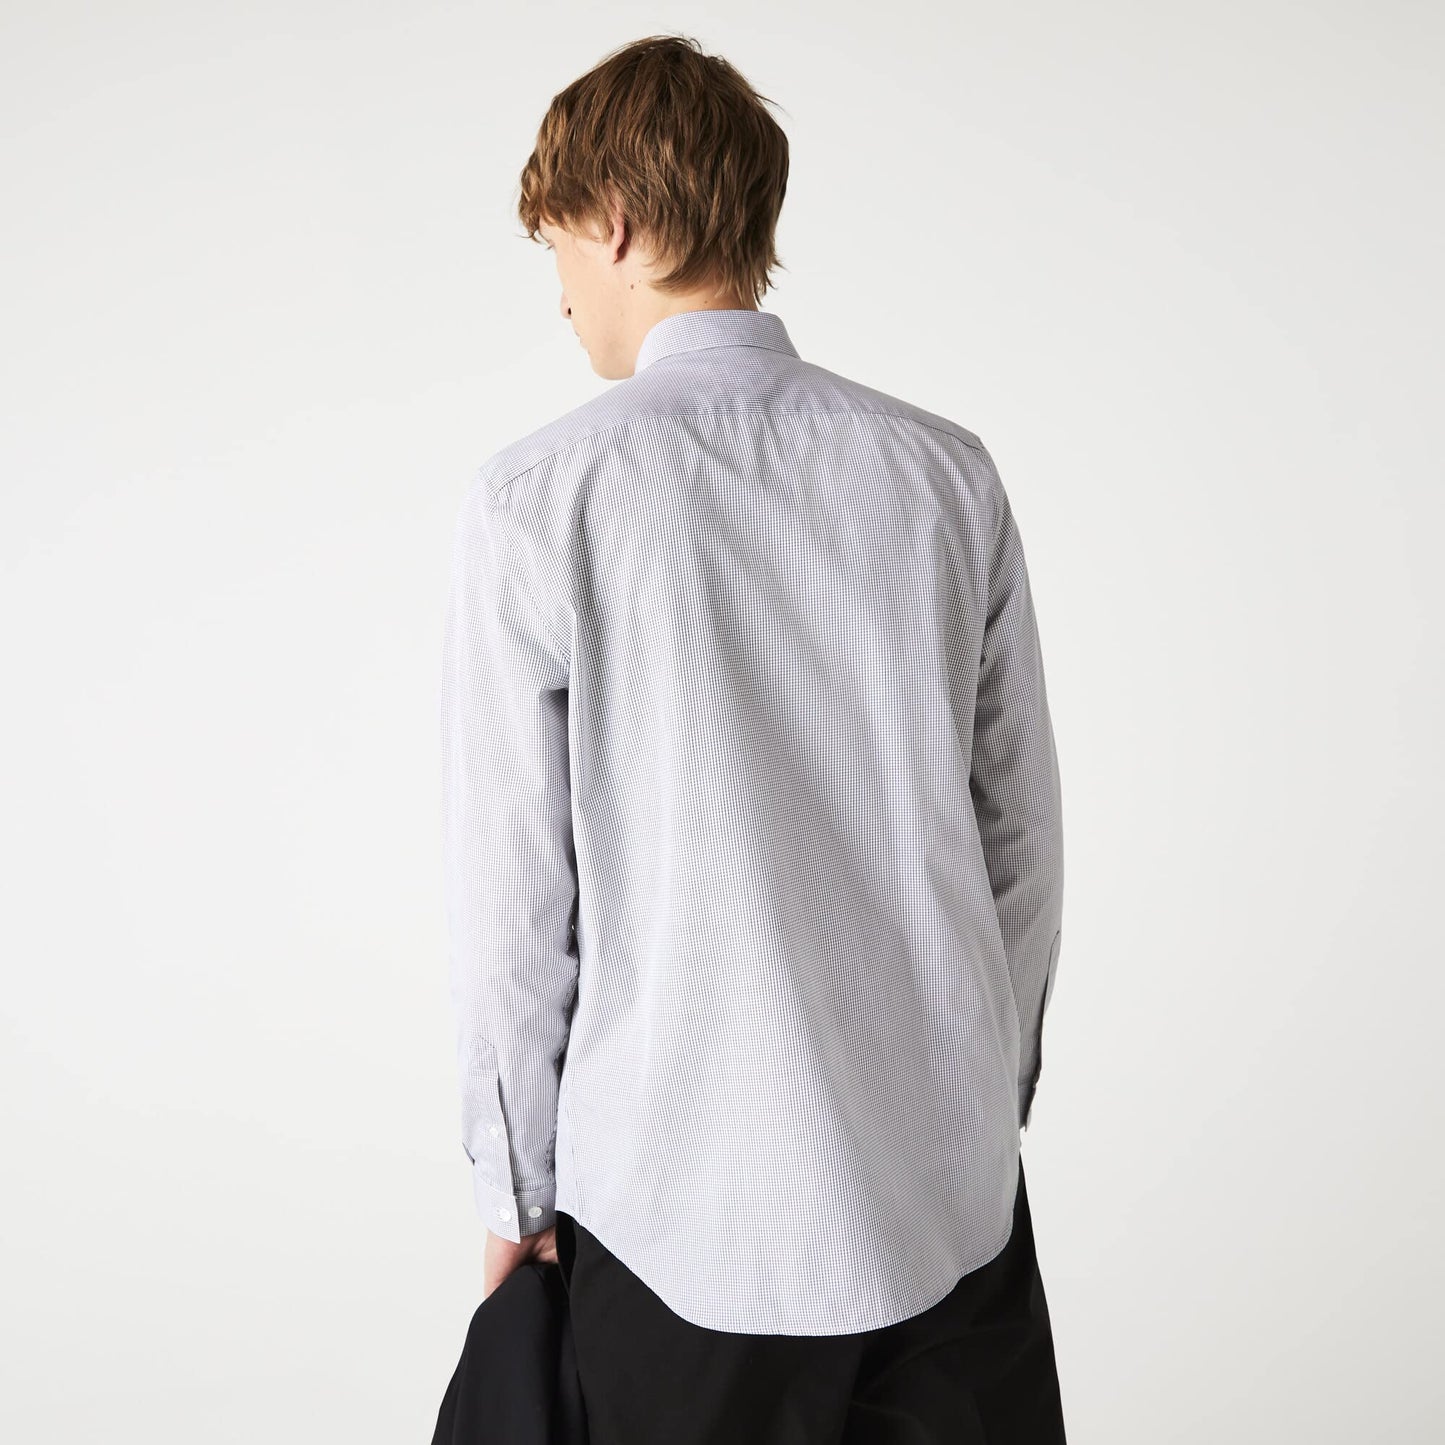 Lacoste Men's Regular Fit Shirt (Grey)